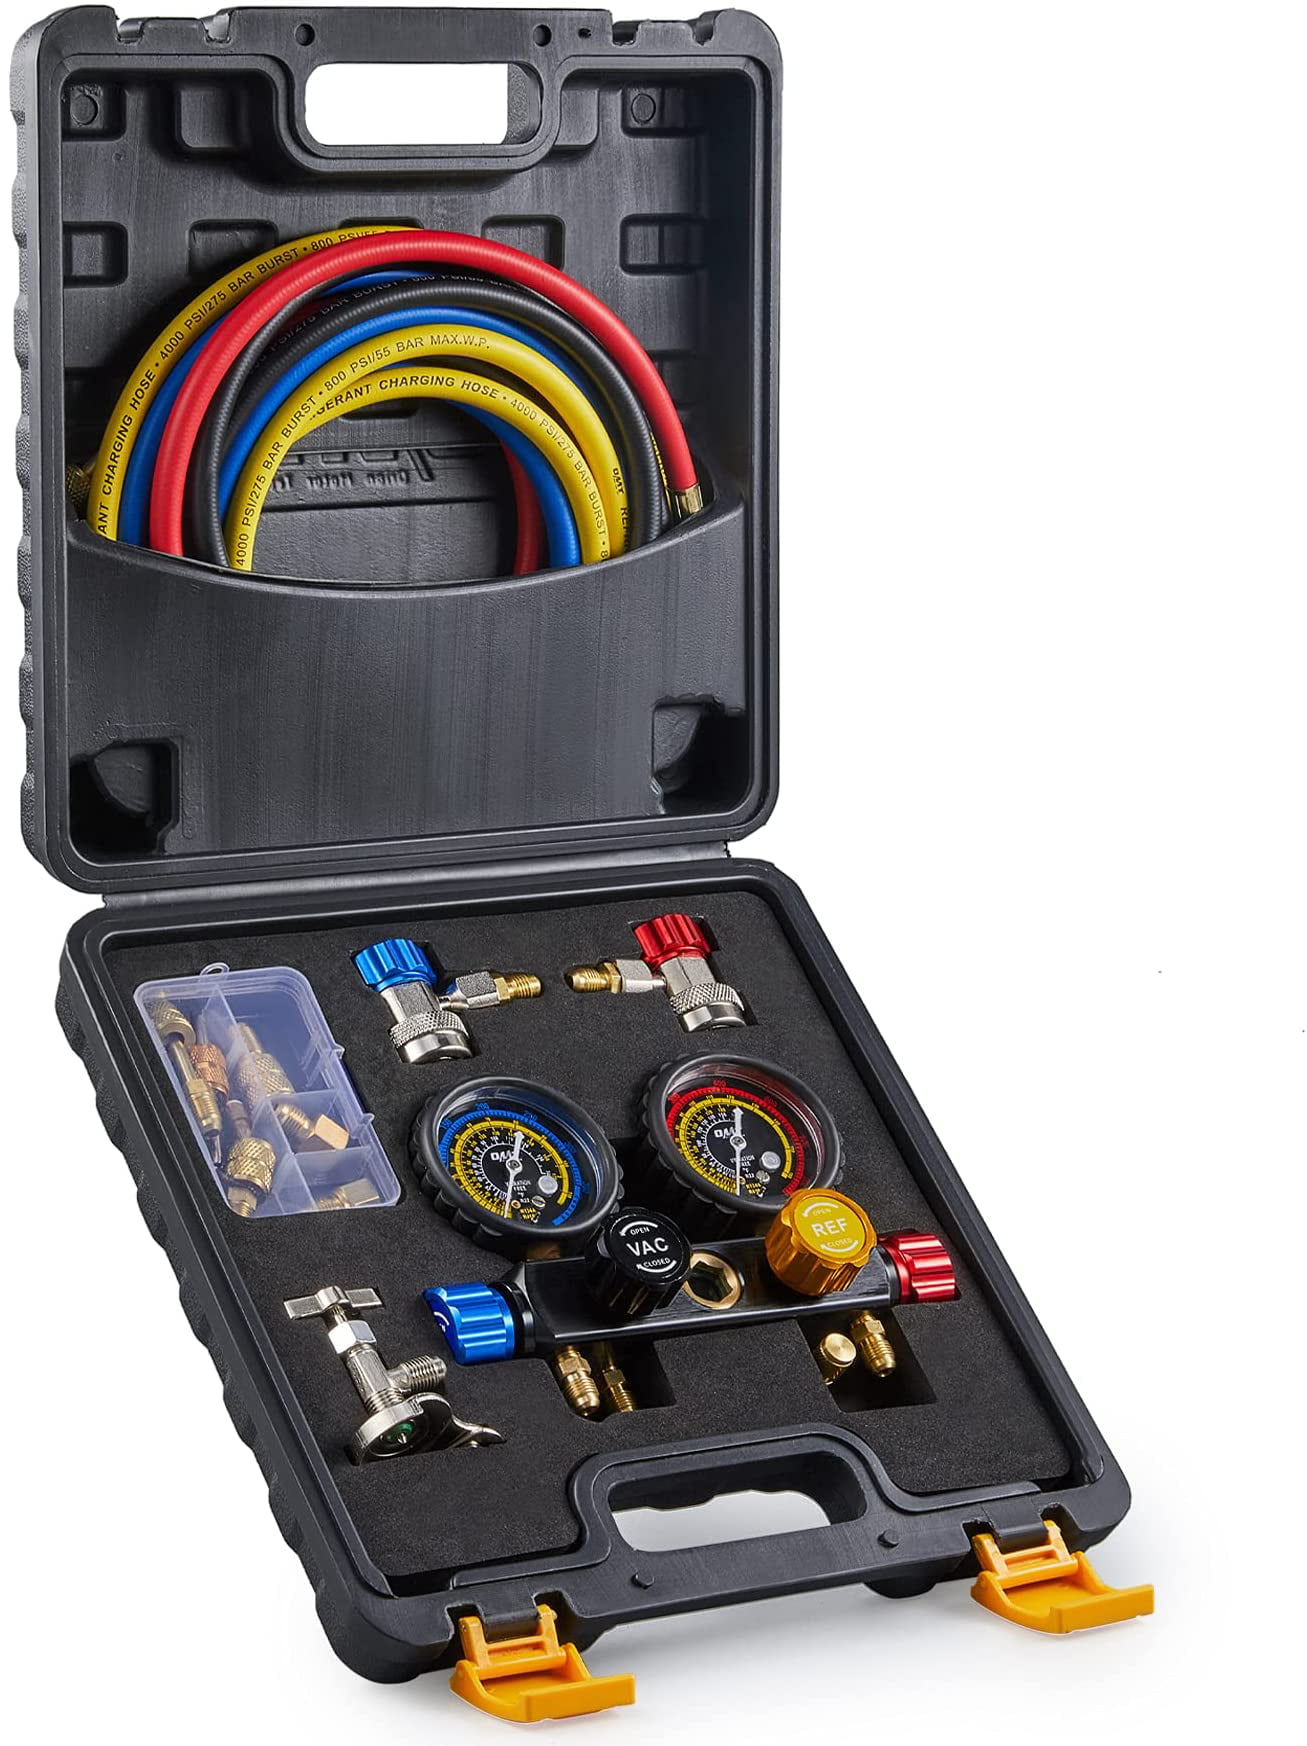 AC Manifold Gauge Set R410a R22 R134a w/Hoses Coupler Adapters Refrigeration Kit 